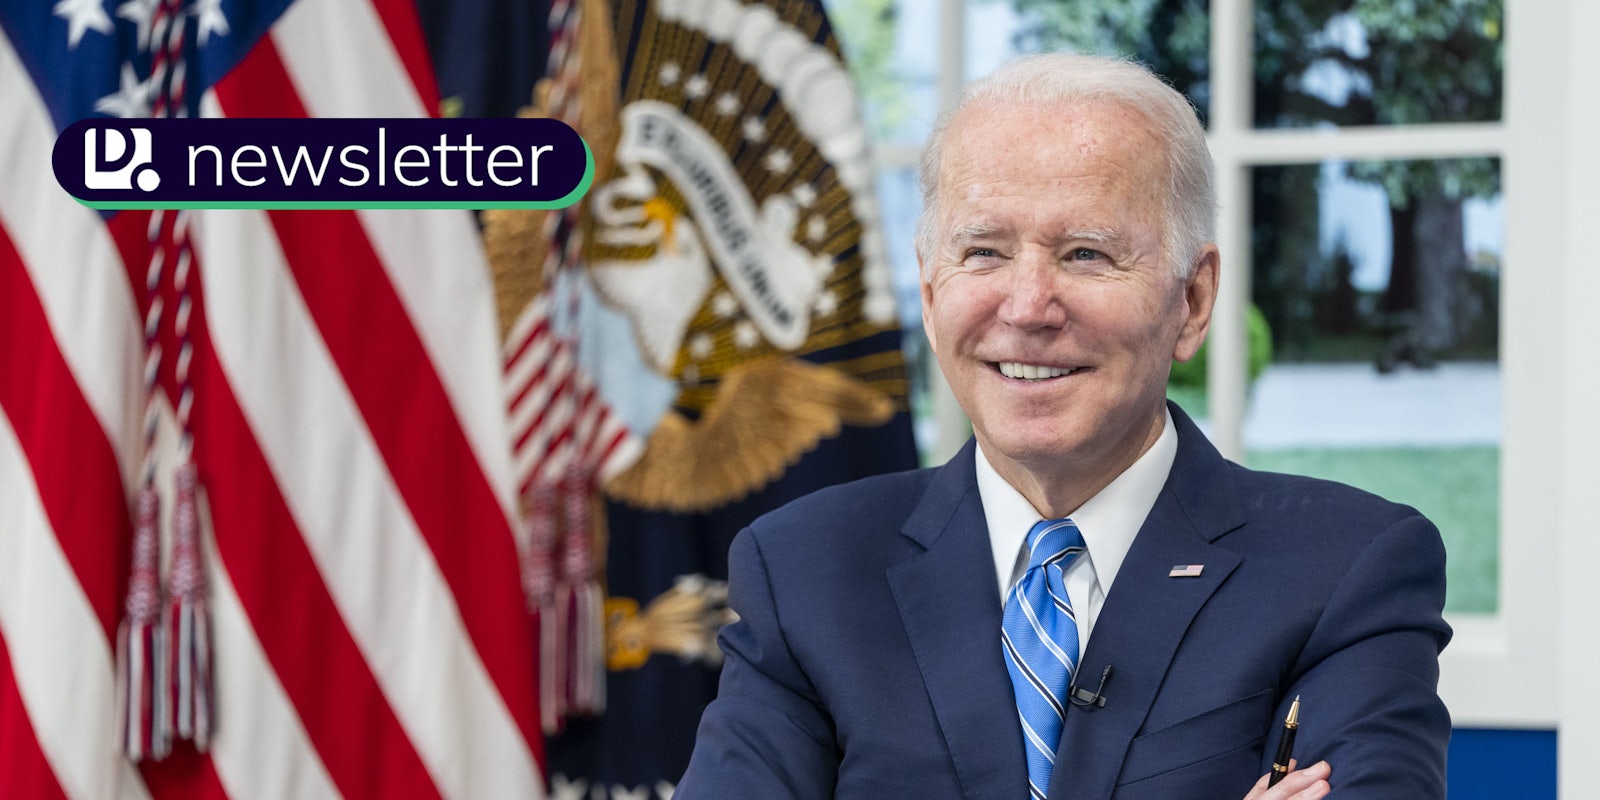 President Joe Biden smiling in front of an American flag. In the top left corner is the Daily Dot newsletter logo.